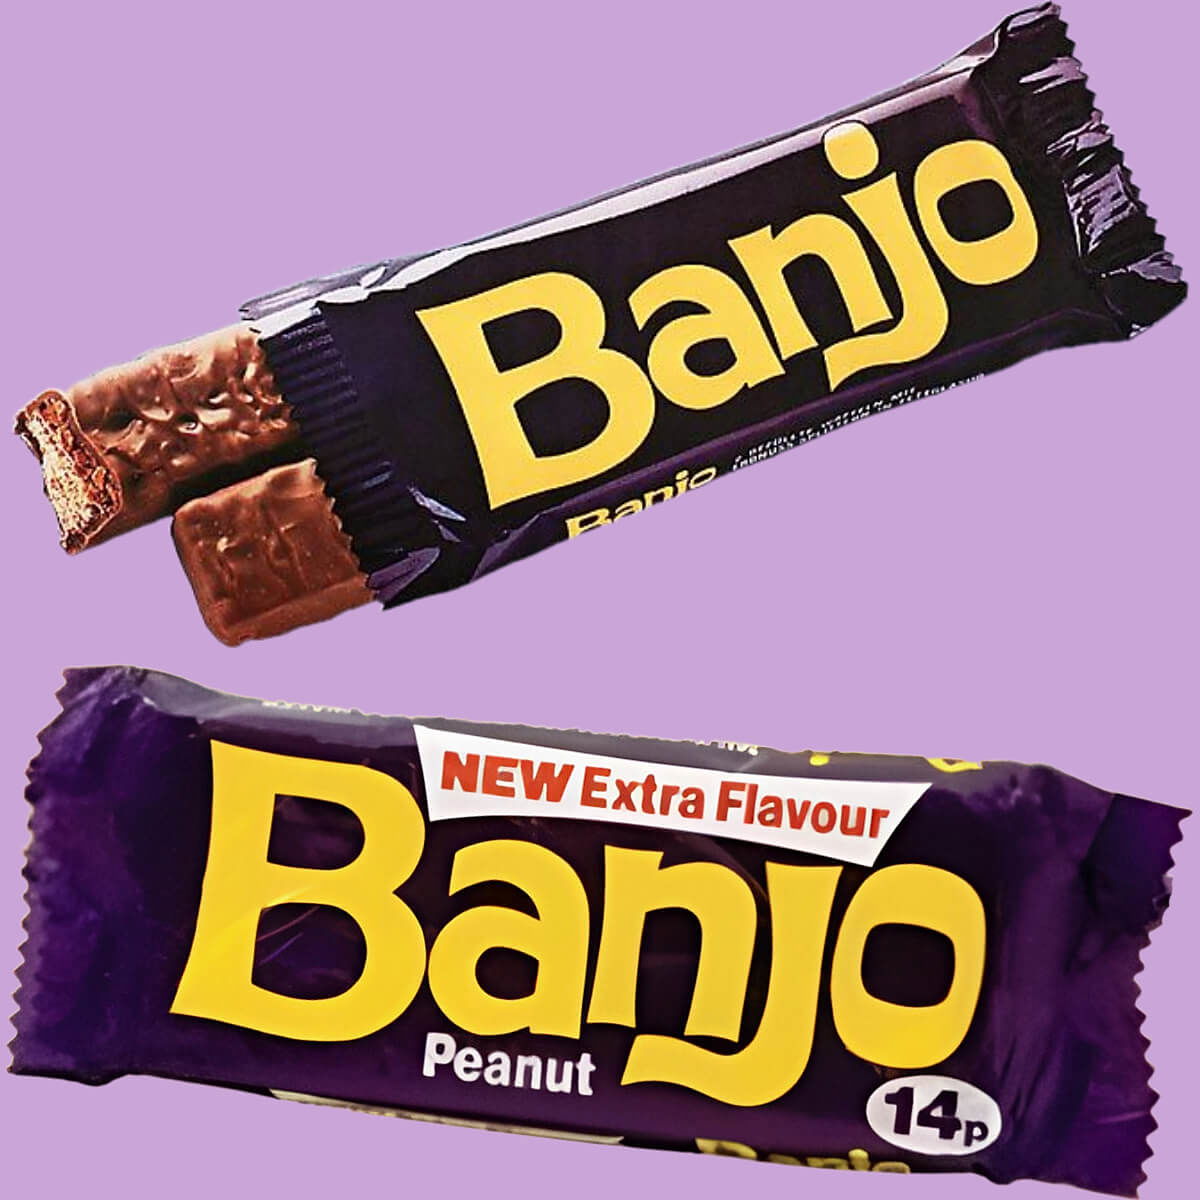 What Happened to Banjo Chocolate Bar?